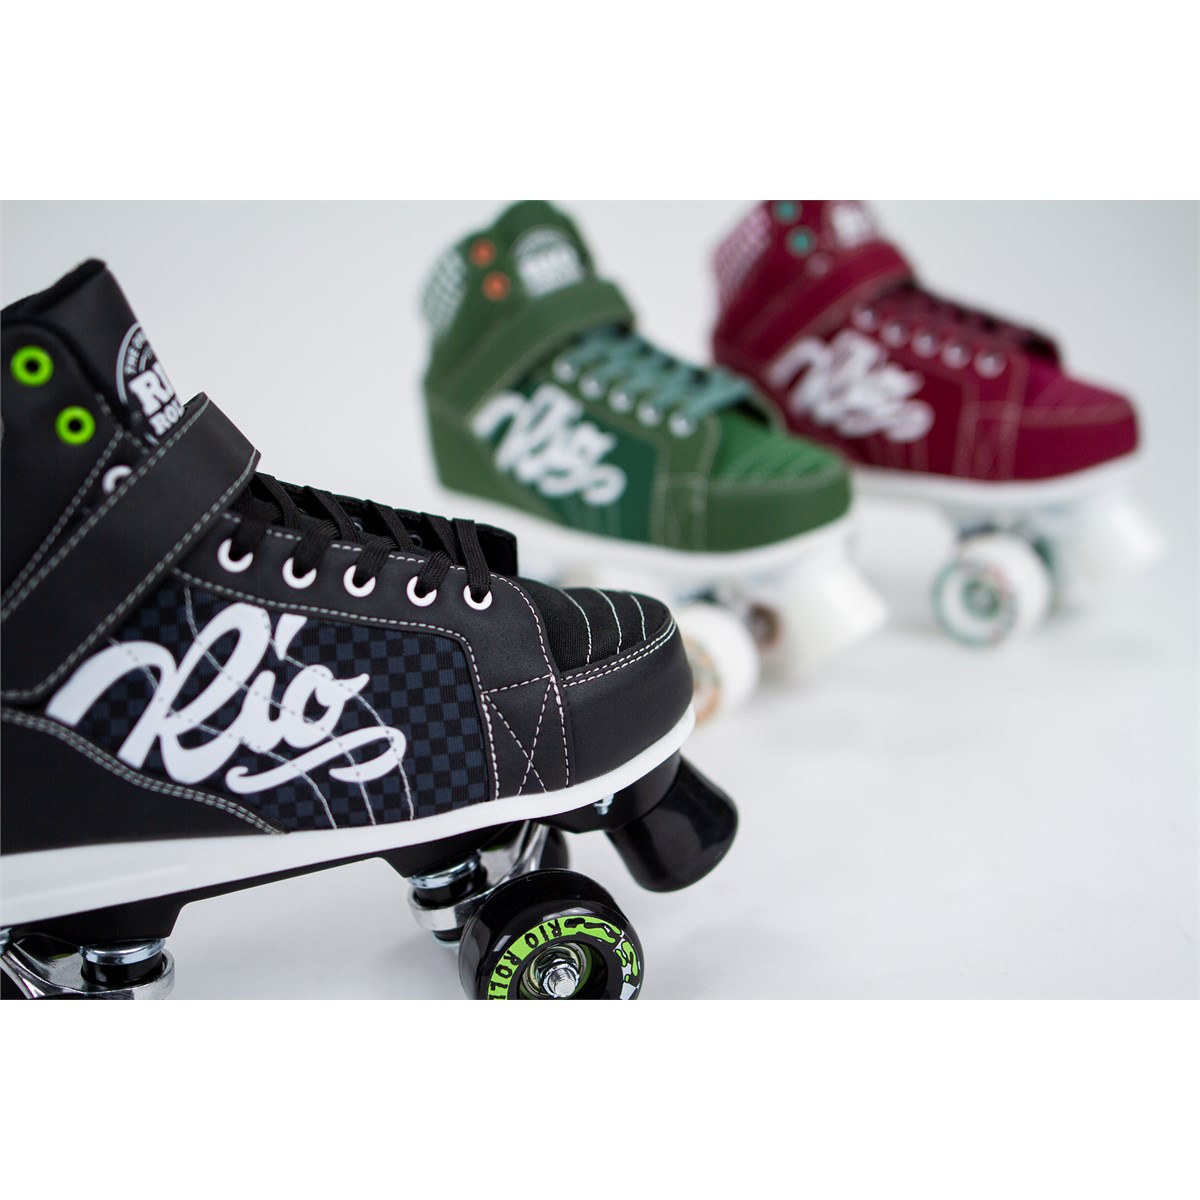 Rio Roller Quad Skates for Sale - Skate Britain